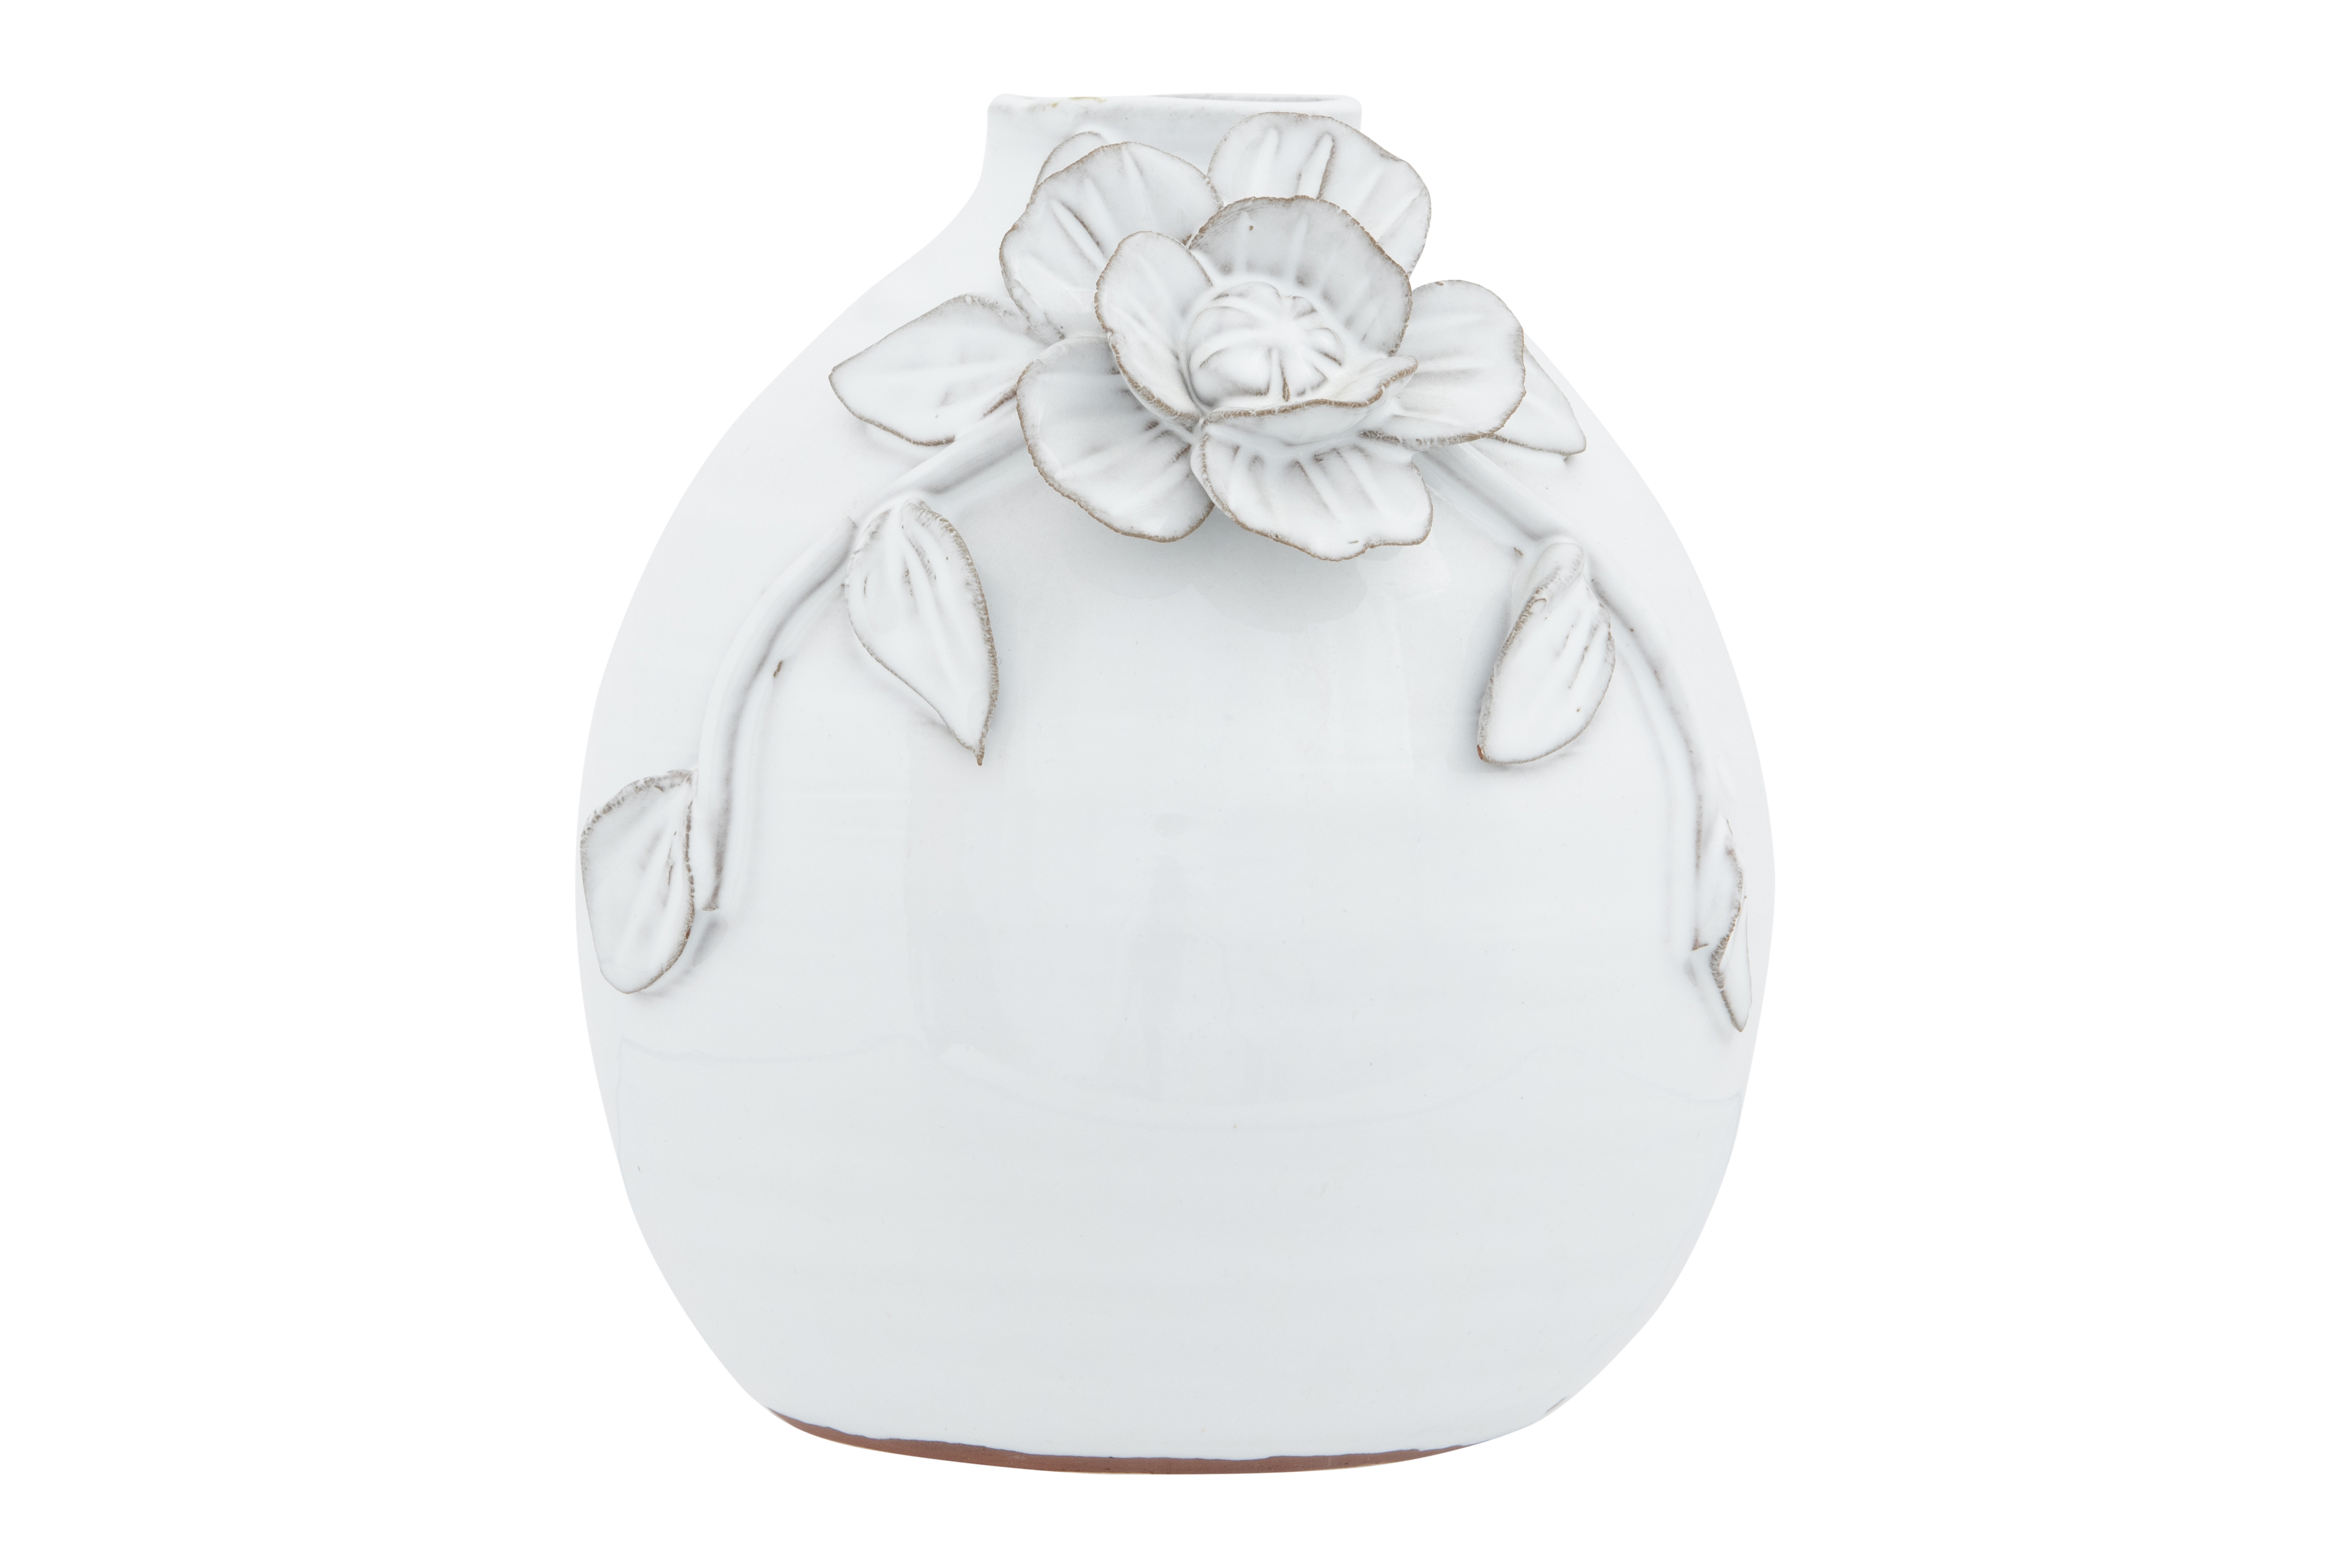 White Terracotta Vase with Decorative Handmade Flower - Image 0